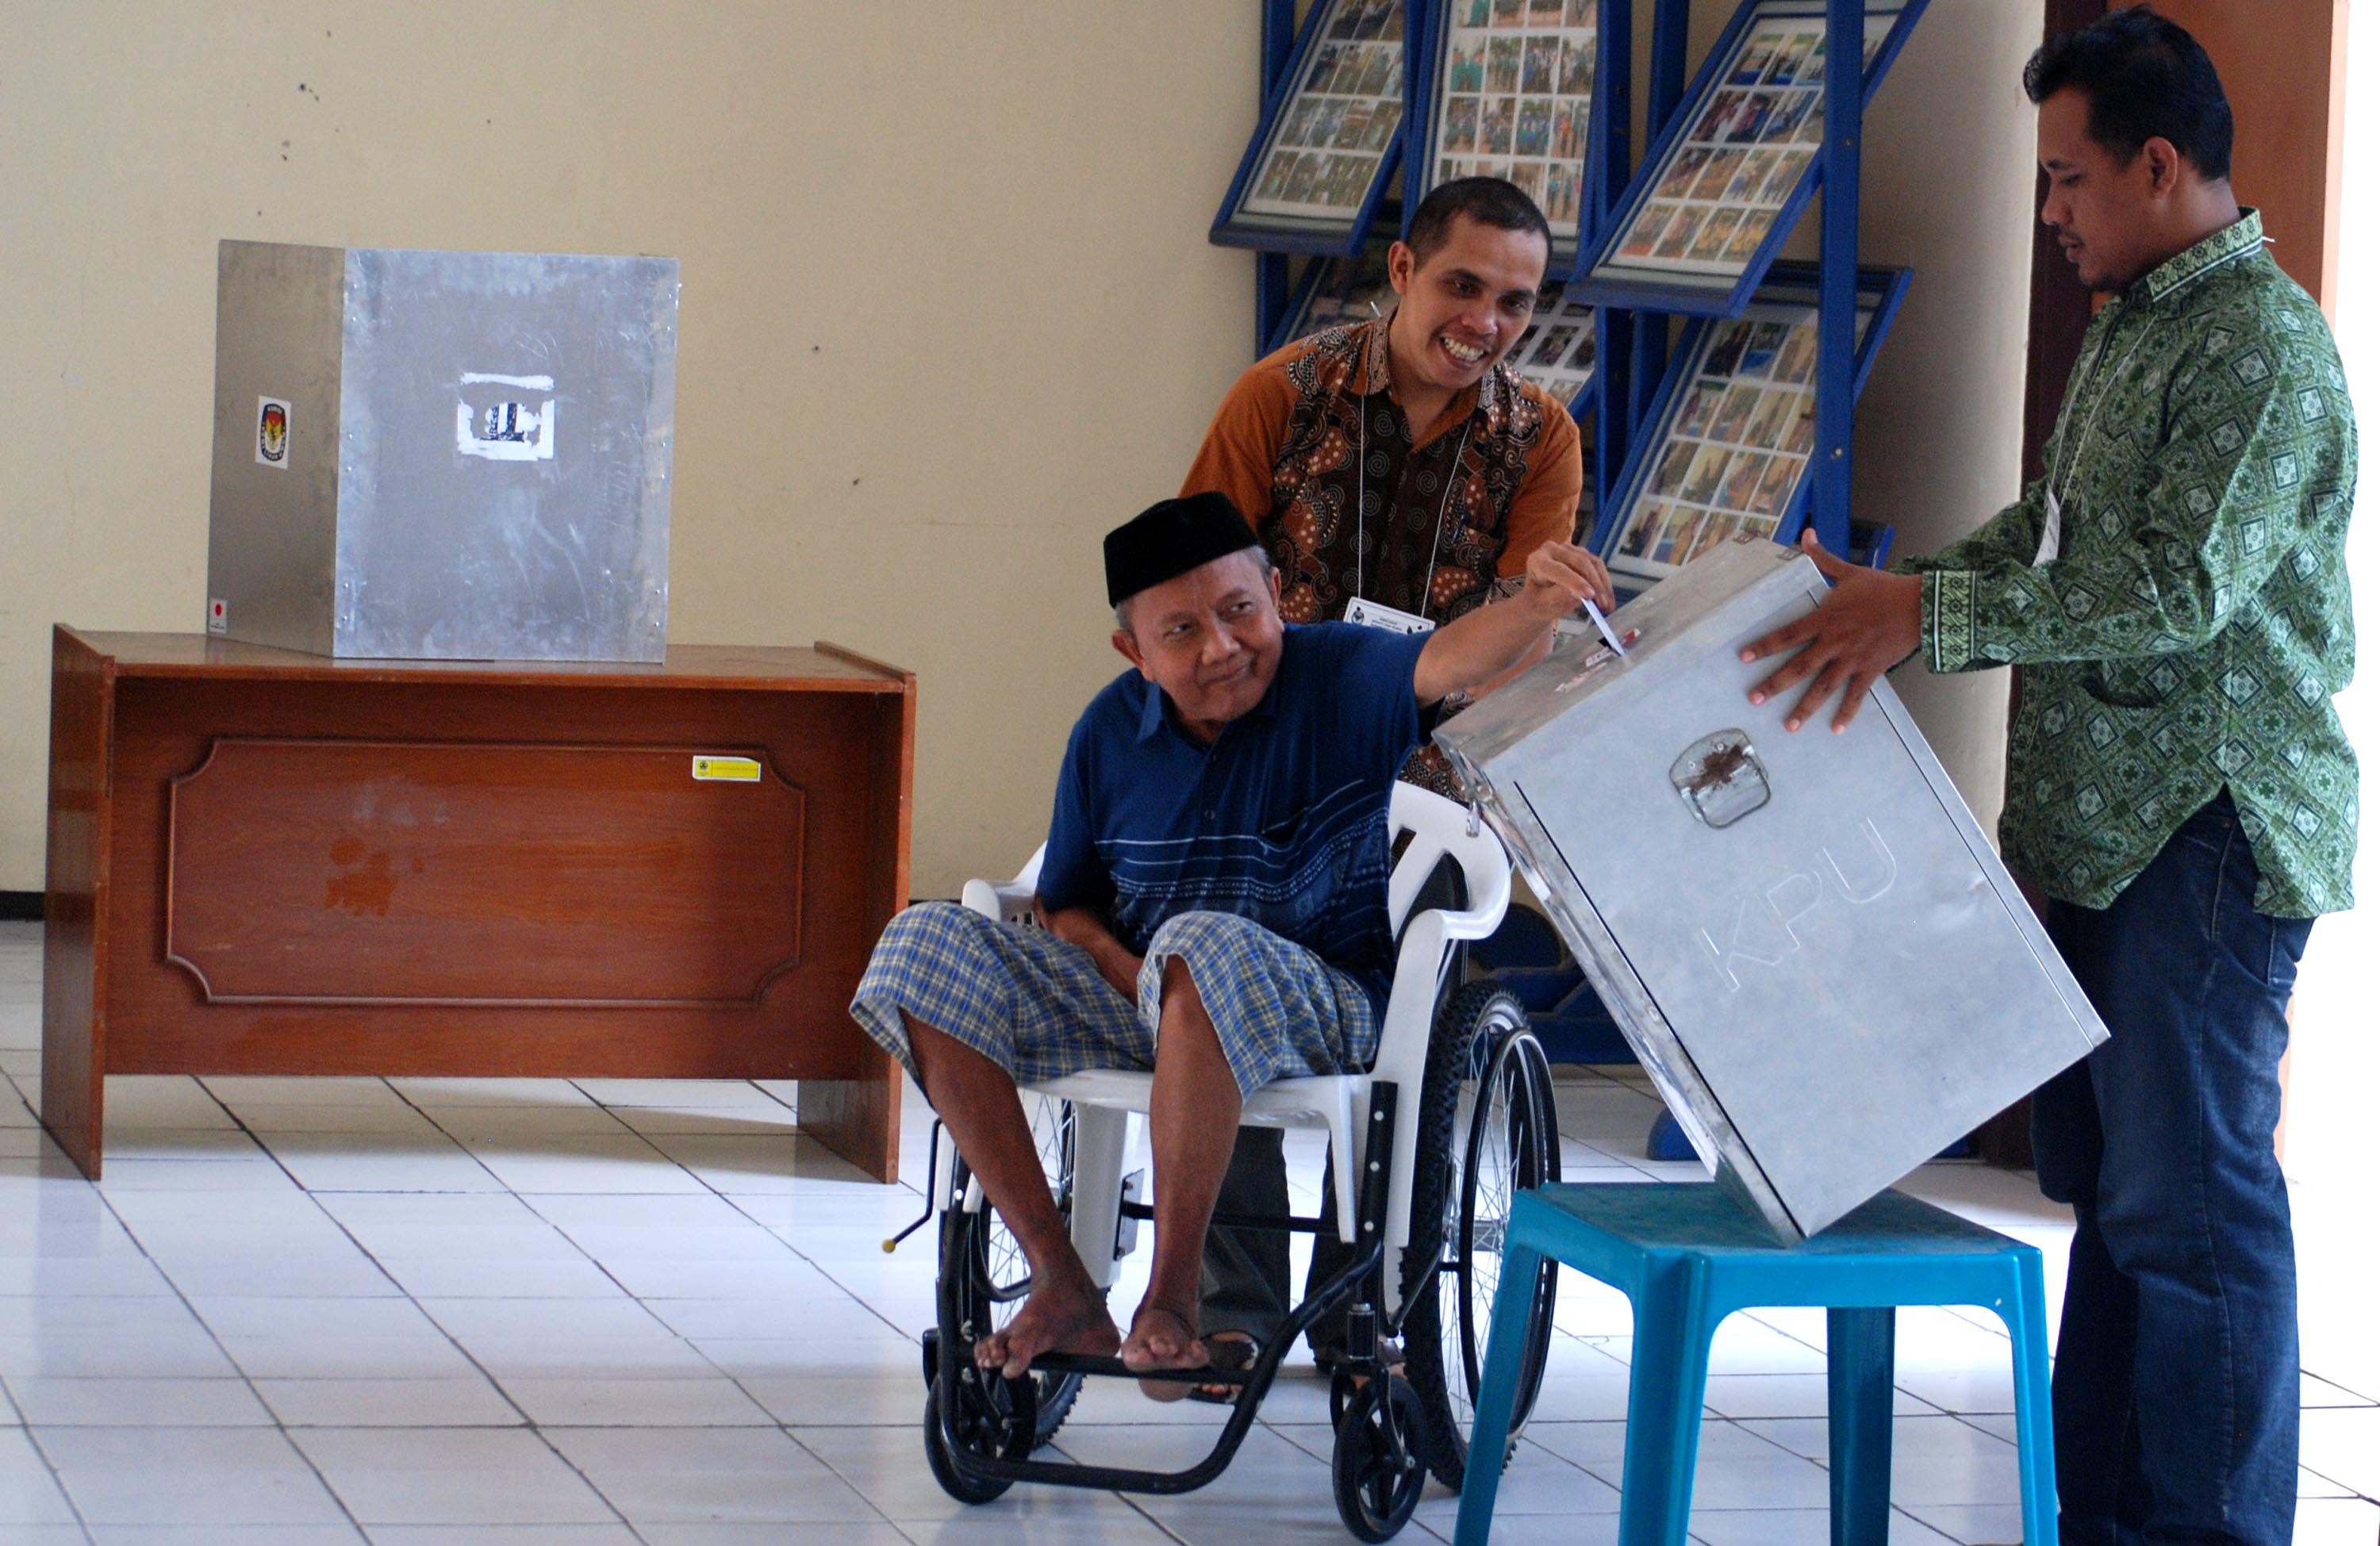 Petugas membantu warga lanjut usia memasukkan surat suara ke dalam kotak di TPS 3 di Panti Jompo Wening Wardoyo, Ungaran Barat, Kabupaten Semarang, Jawa Tengah, dalam Pilkada serentak, 9 Desember 2015. Foto oleh Aditya Pradana Putra/Antara 